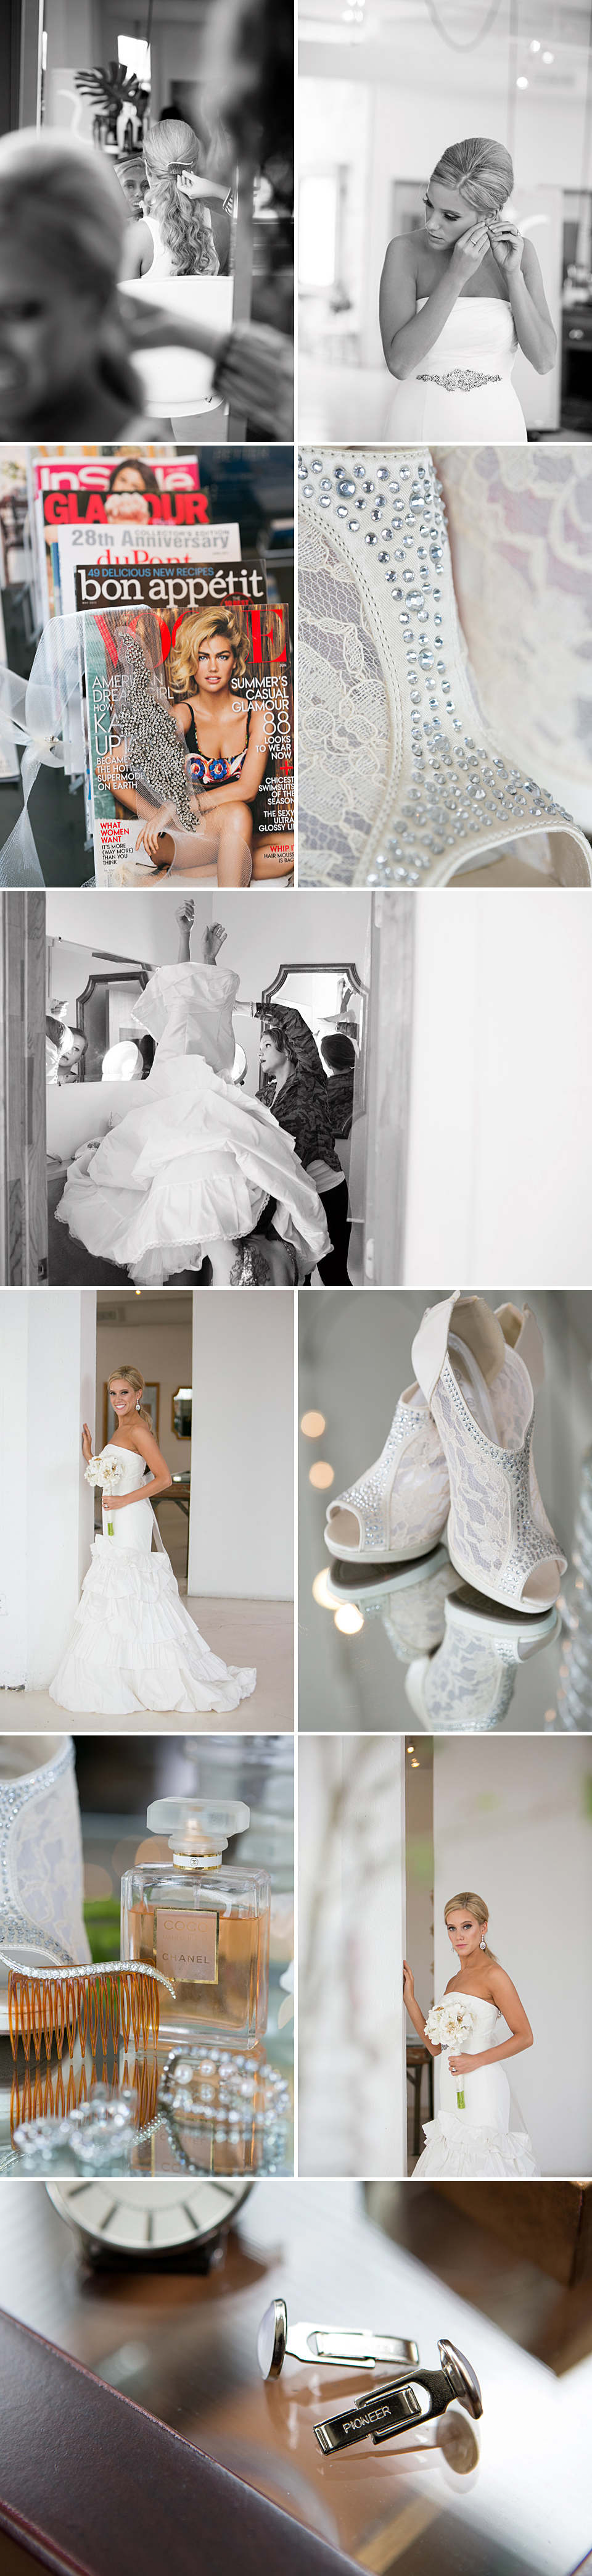 Wedding details, bridal heels, Skyline Salon KC, Putting dress on, B&W images, KC wedding photographers